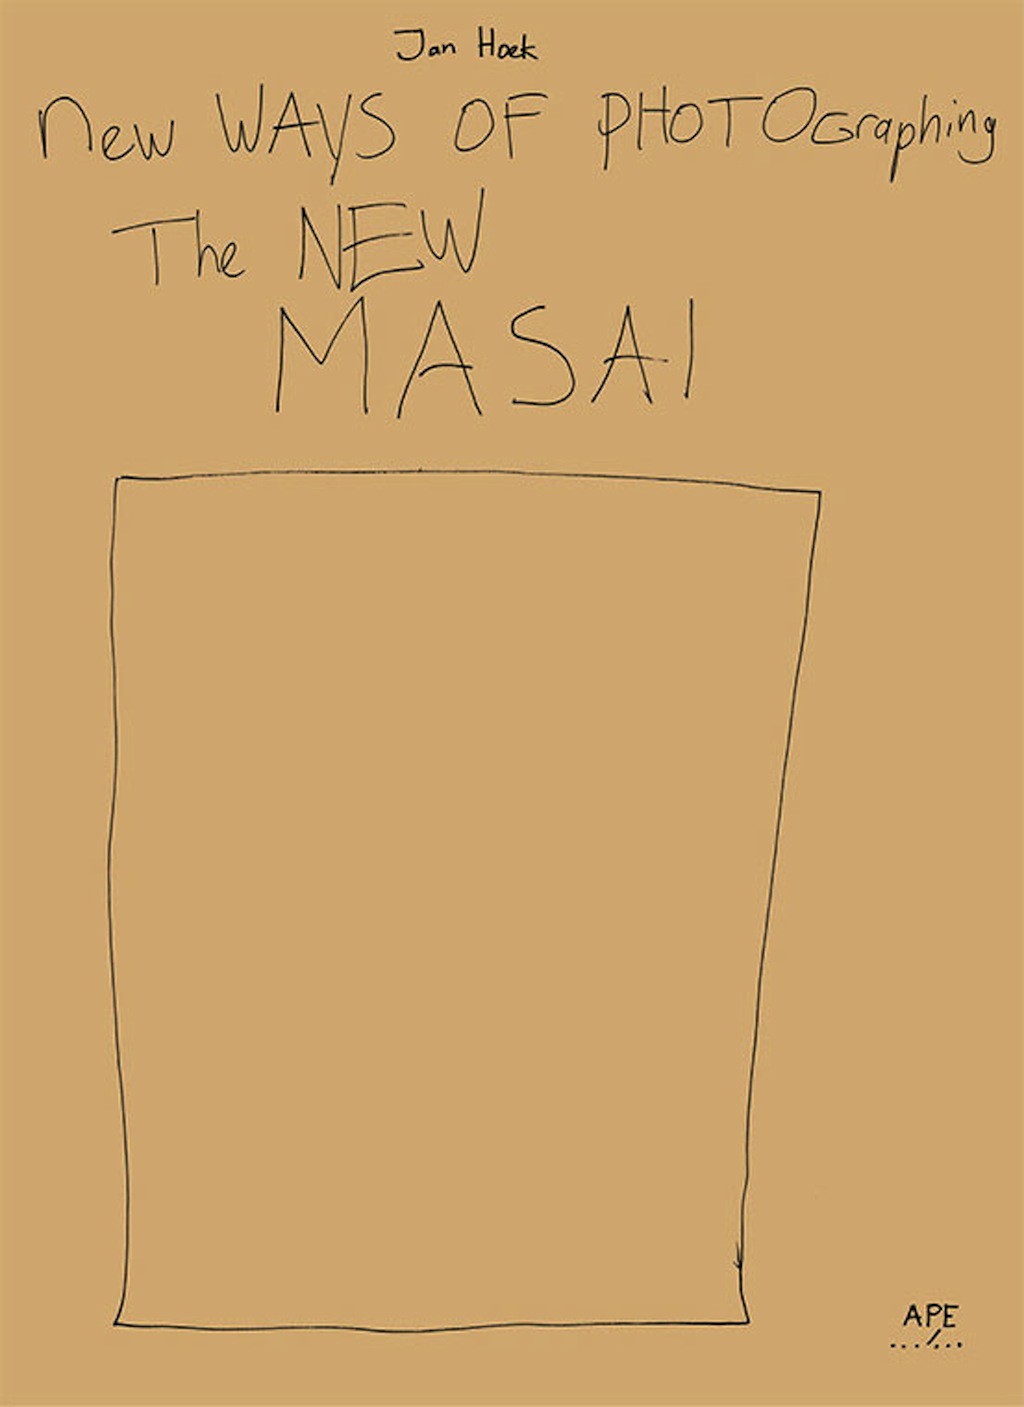 photo-bookshop-new-masai-cover1